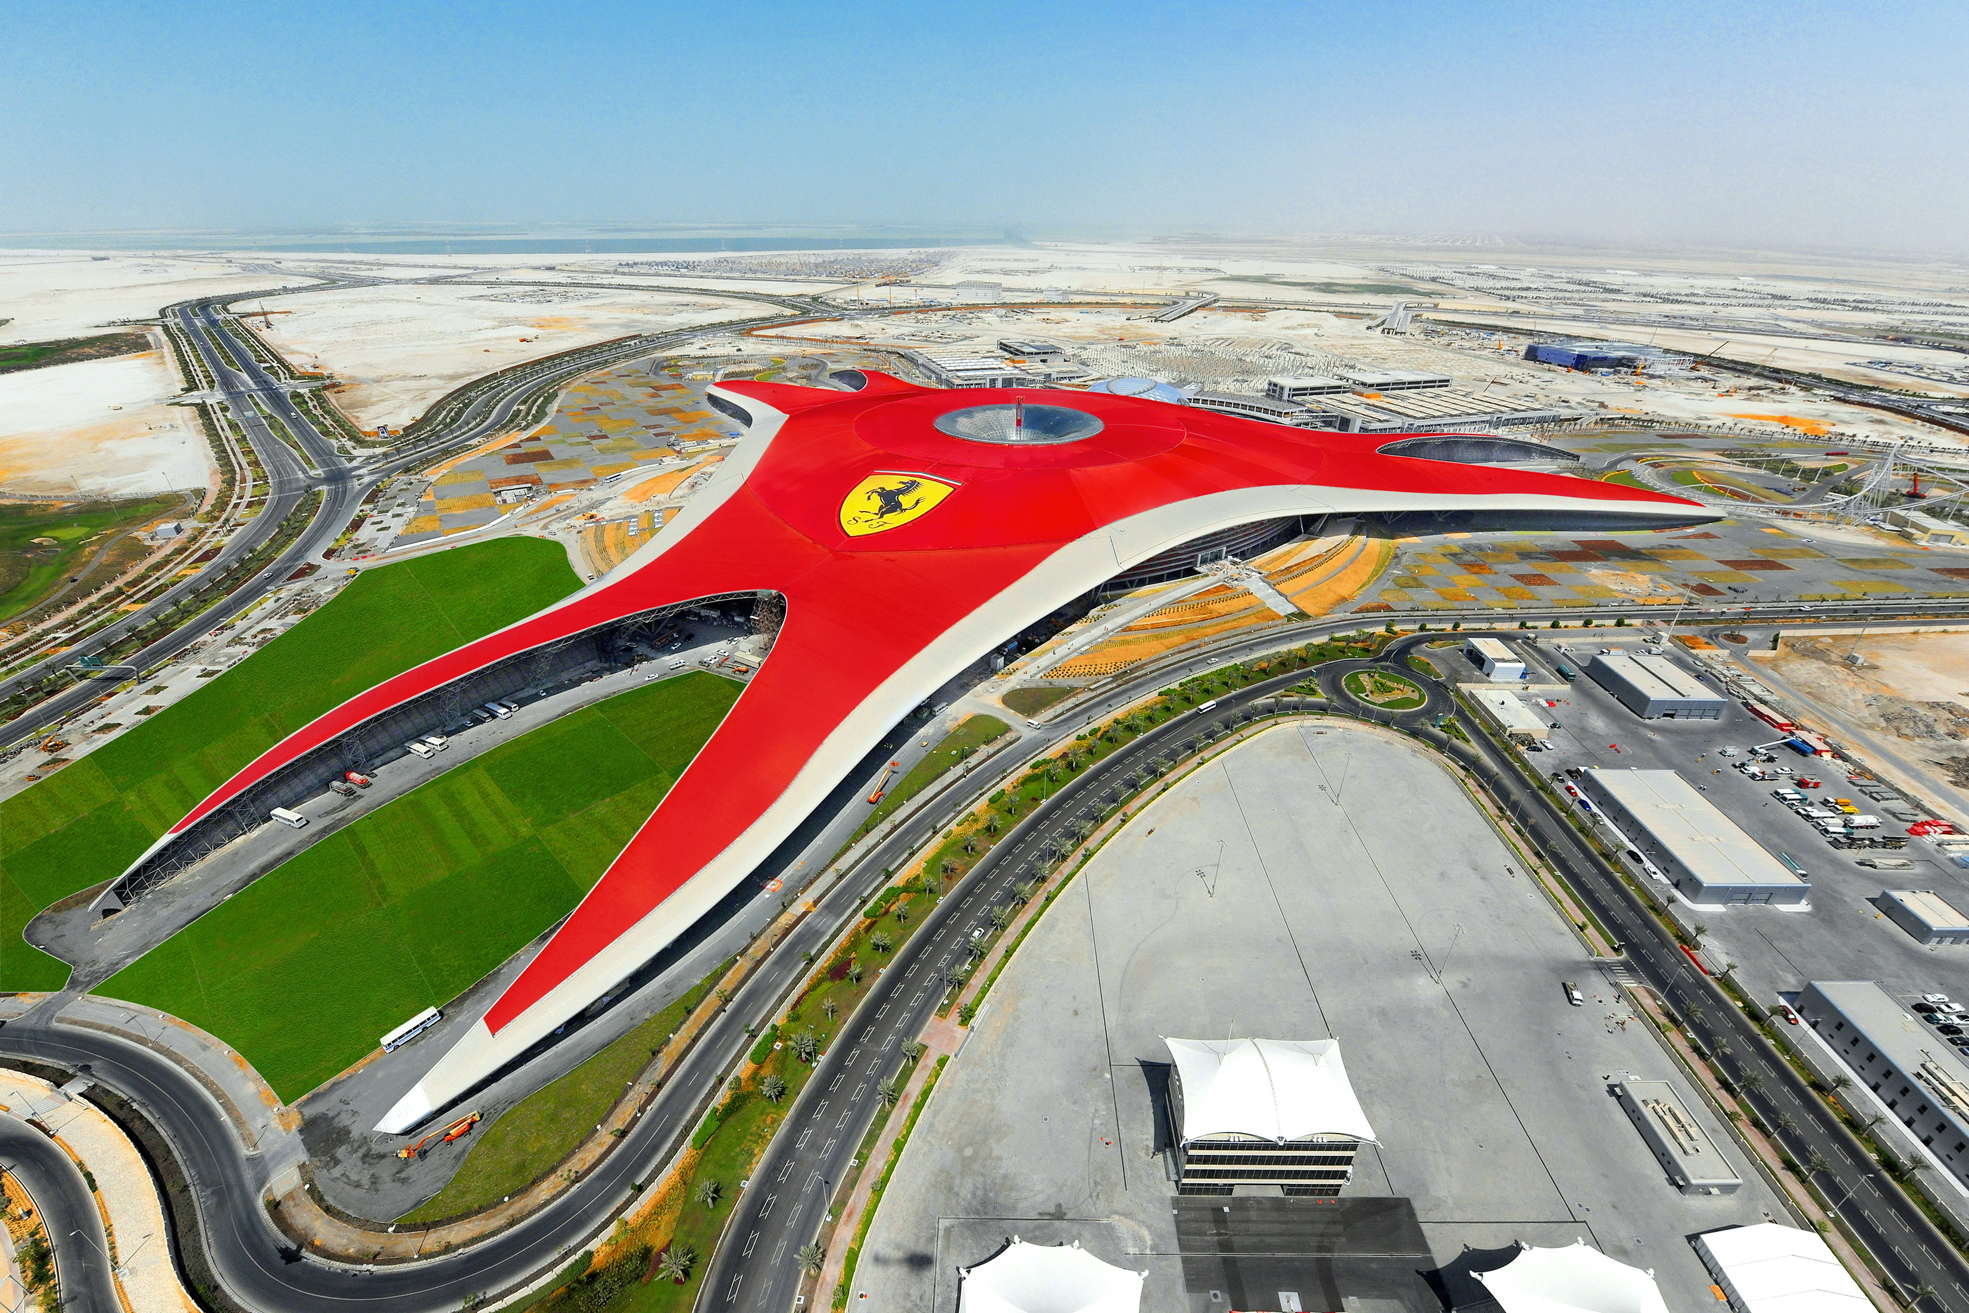 Ferrari World Abu Dhabi: